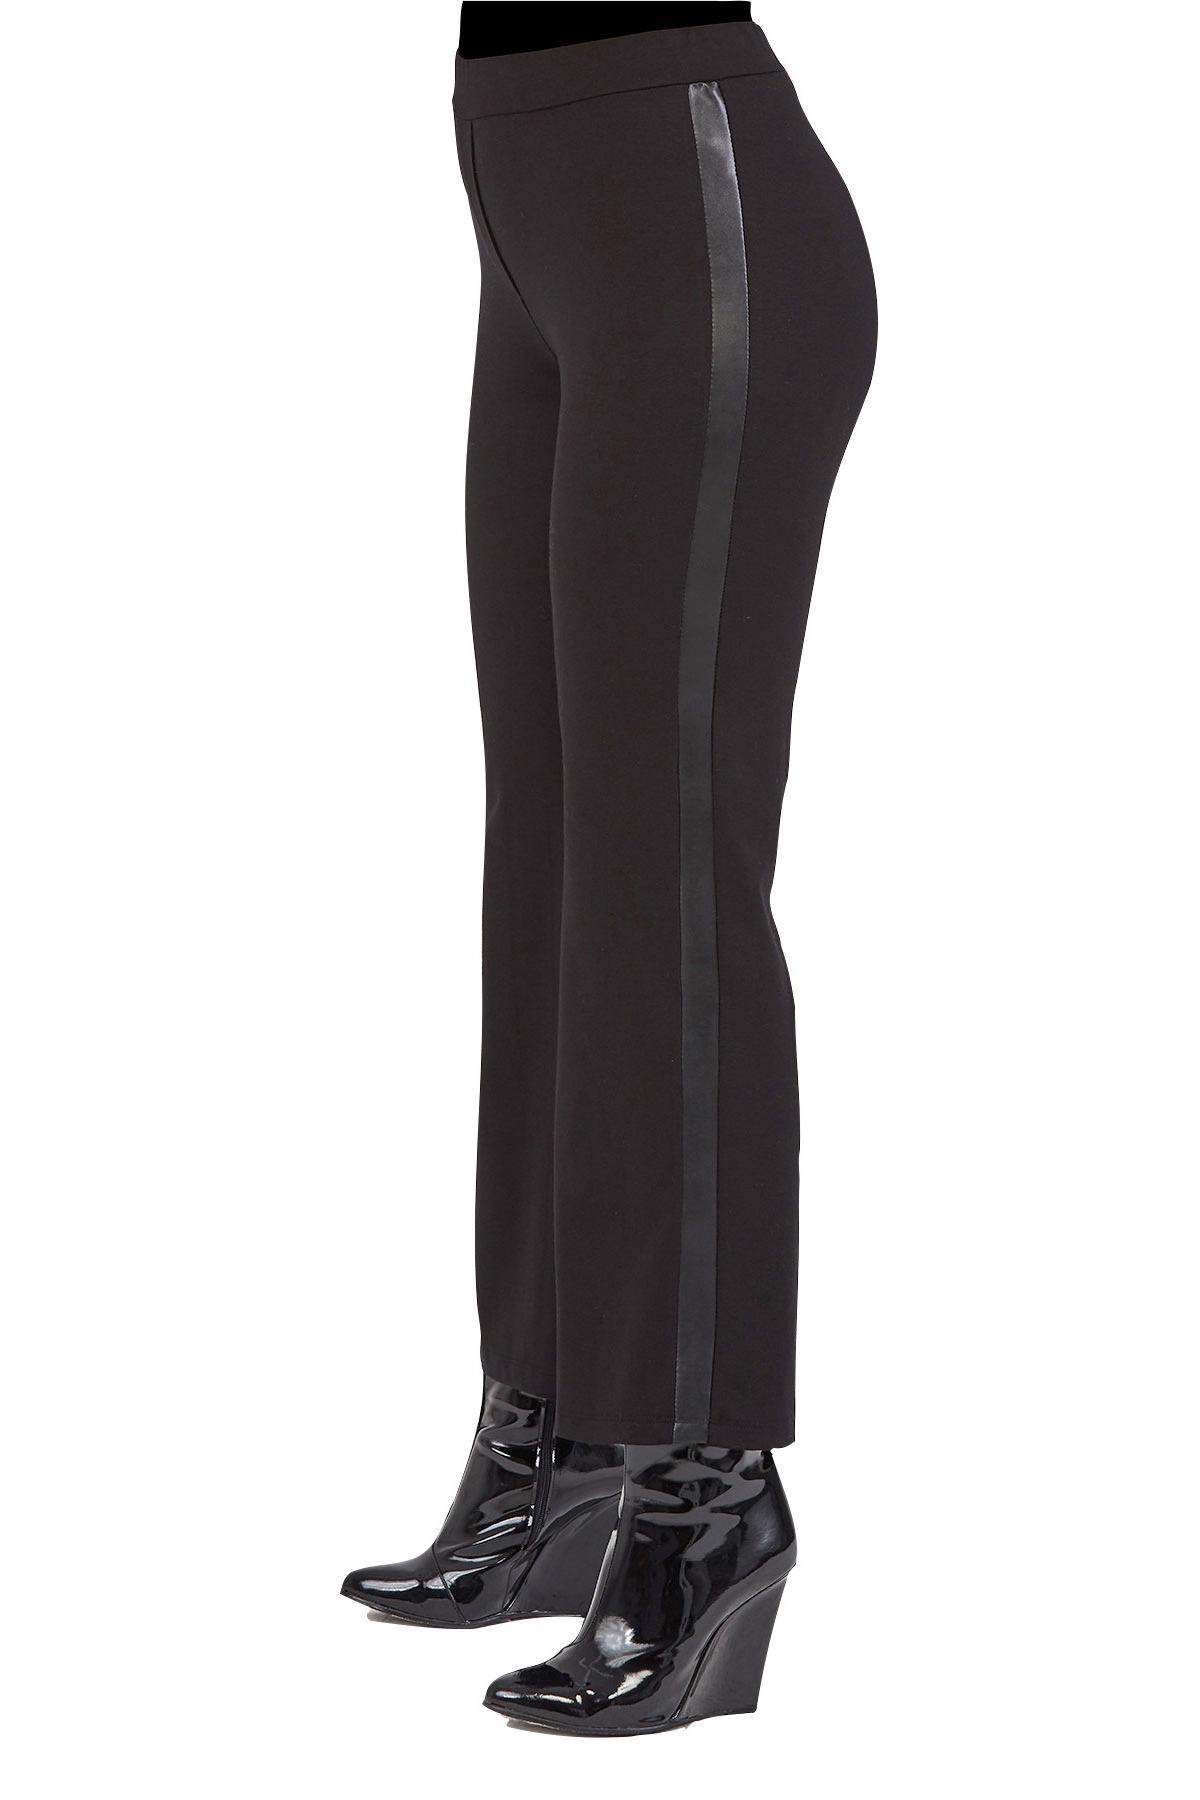 fierte-kadin-buyuk-beden-pantolon-lm52110-yuksek-elastik-bel-ispanyol-paca-deri-serit-siyah-26507.jpg